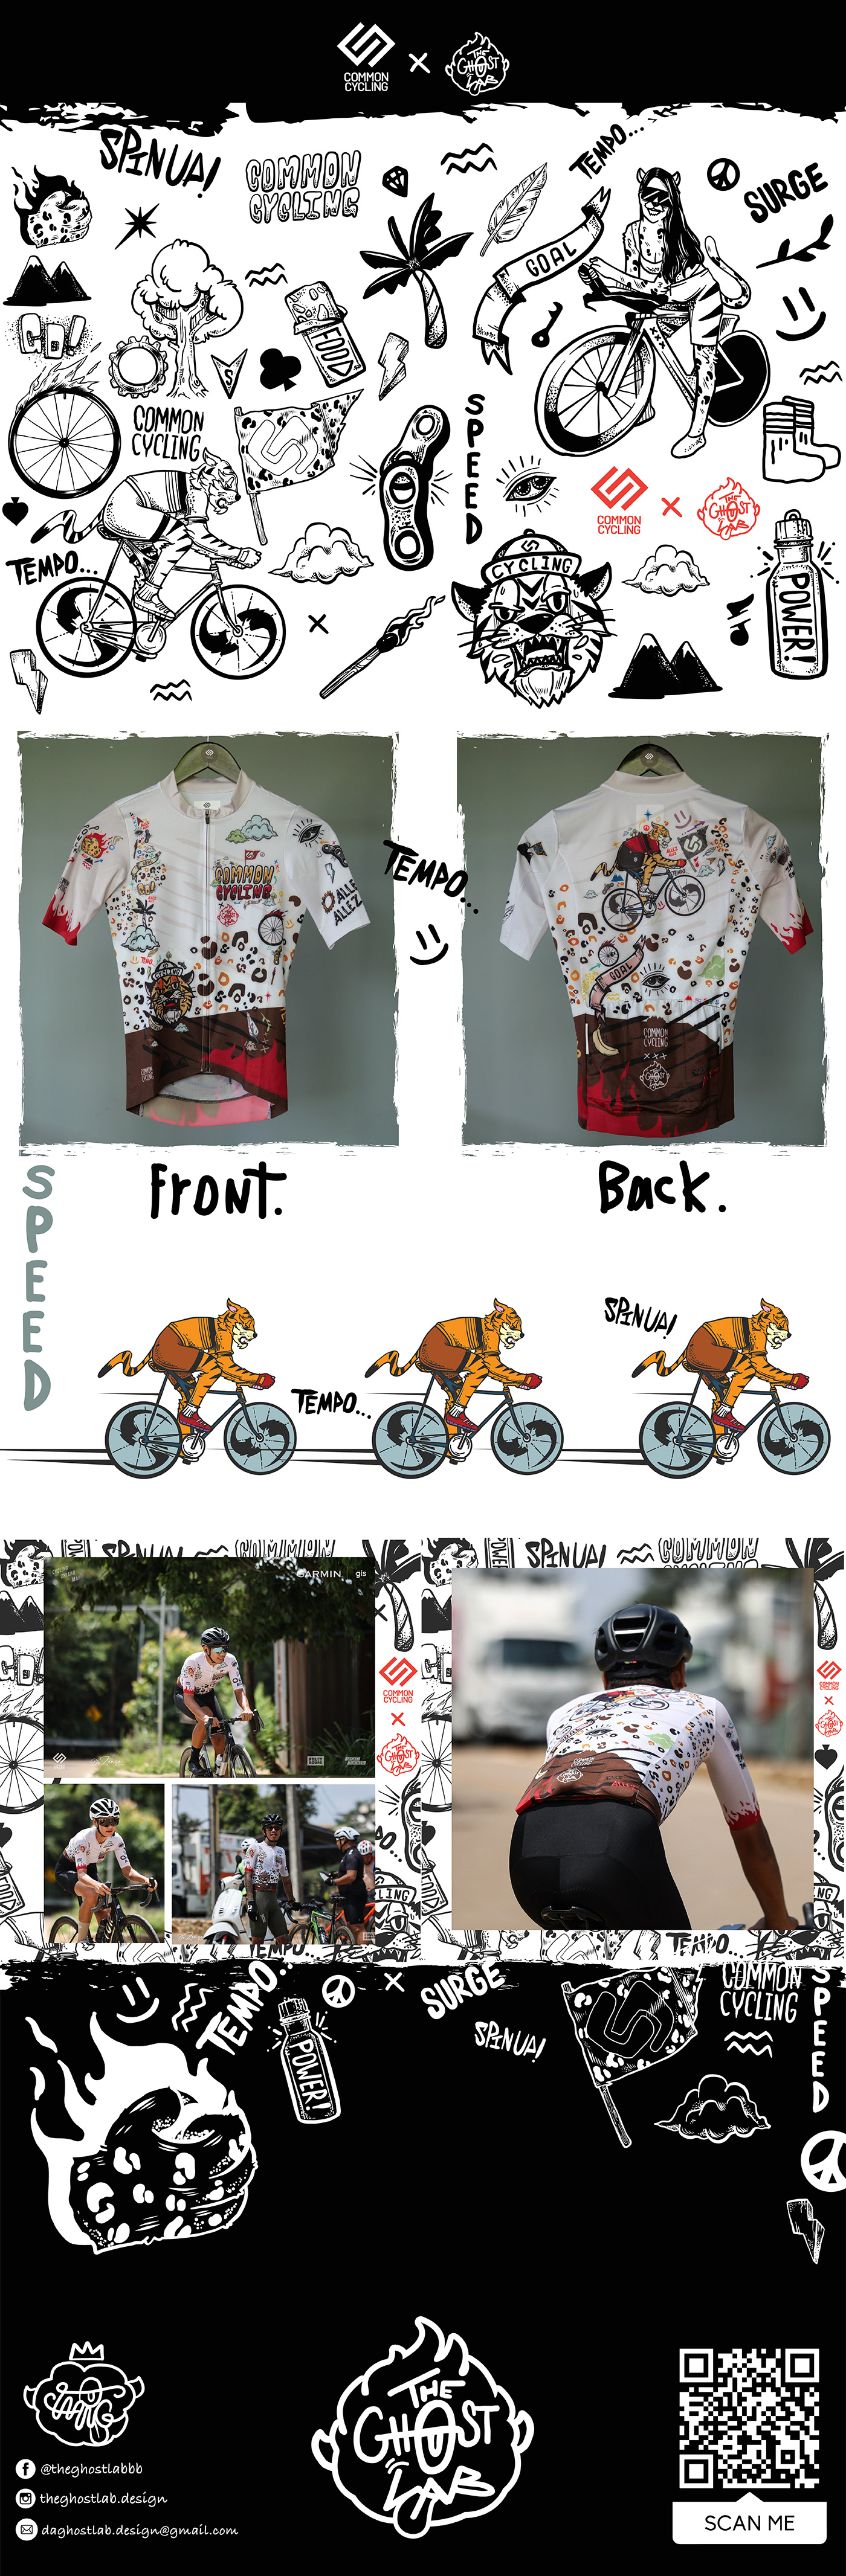 black and white cartoon clothes Clothing Cycling Cyclingshirt fashion design pattern design  streetwear Urban